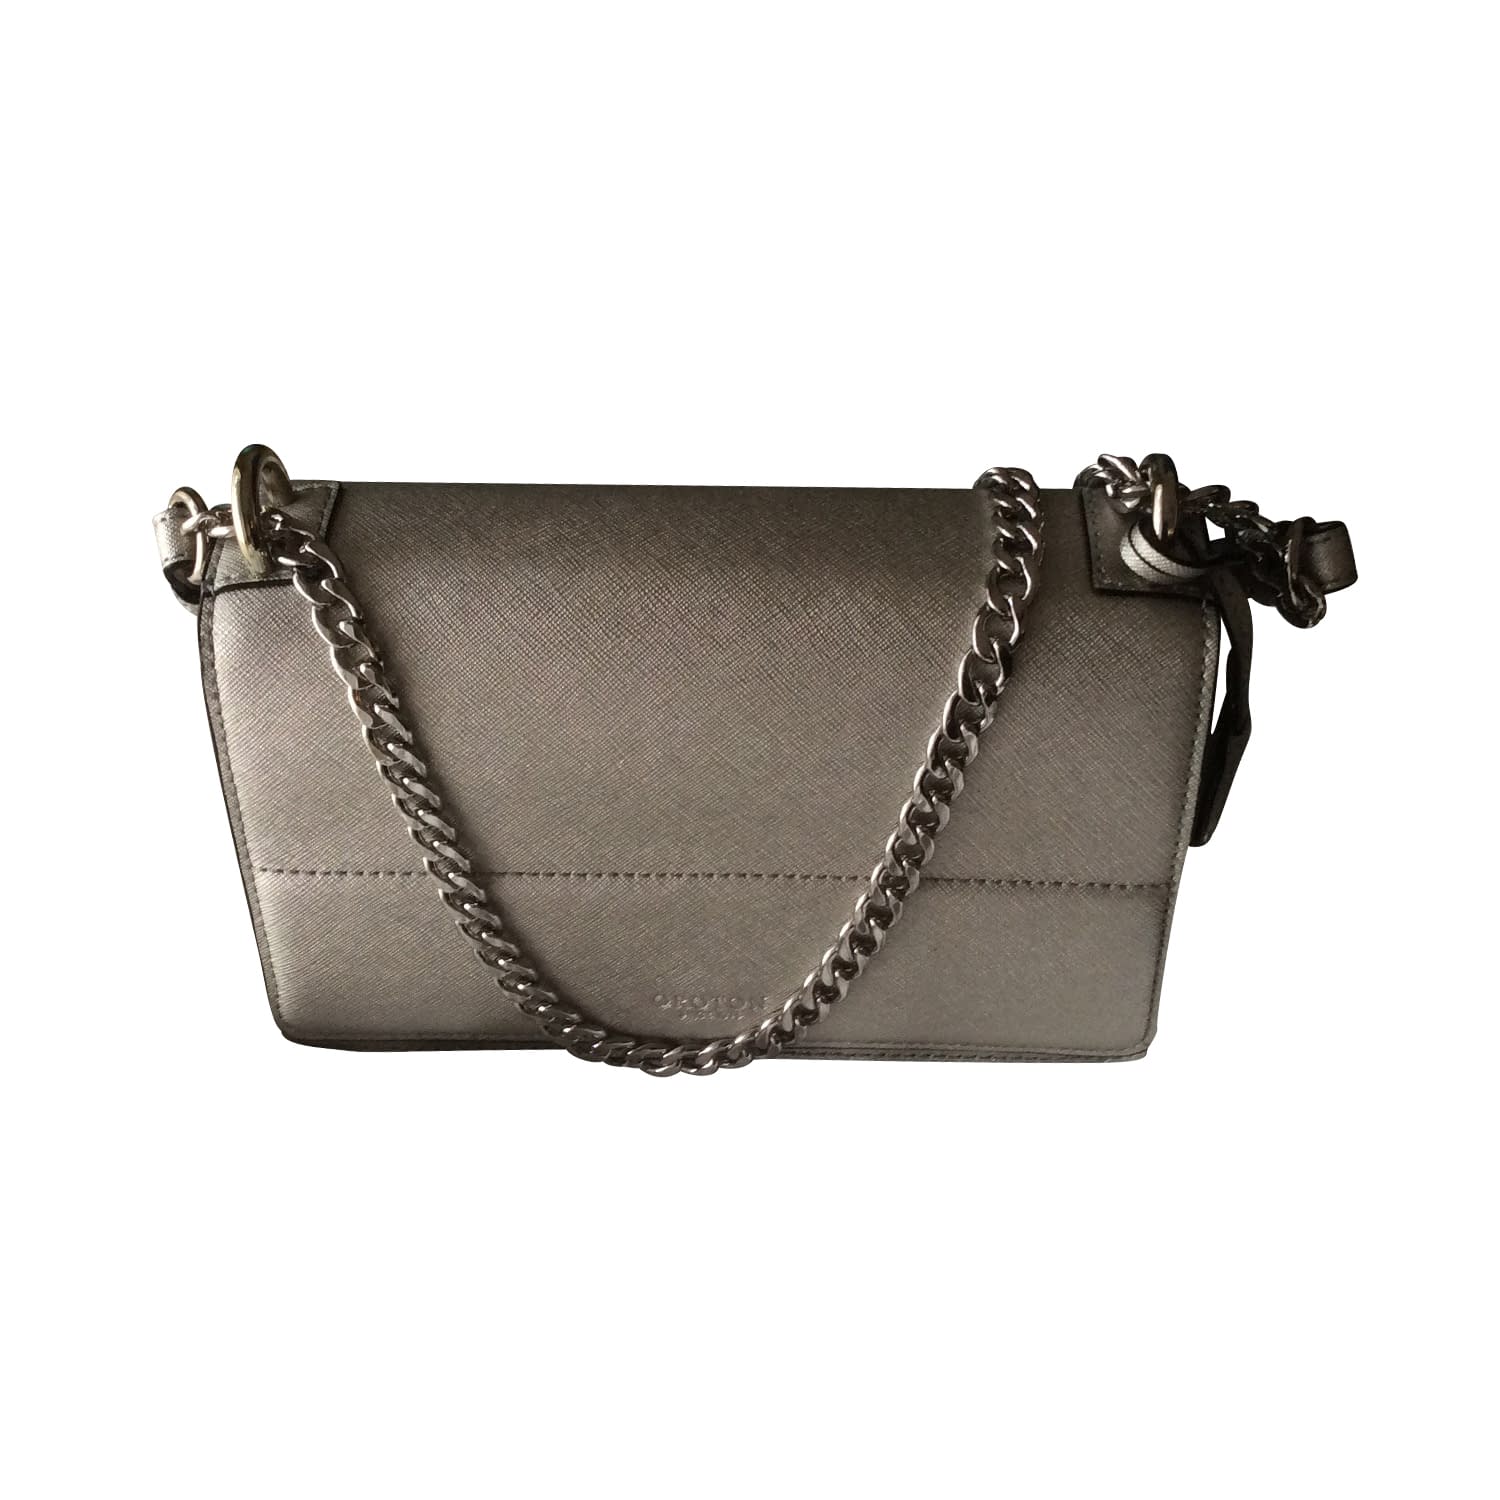 OROTON Fashionable silver shoulder bag | Modsie